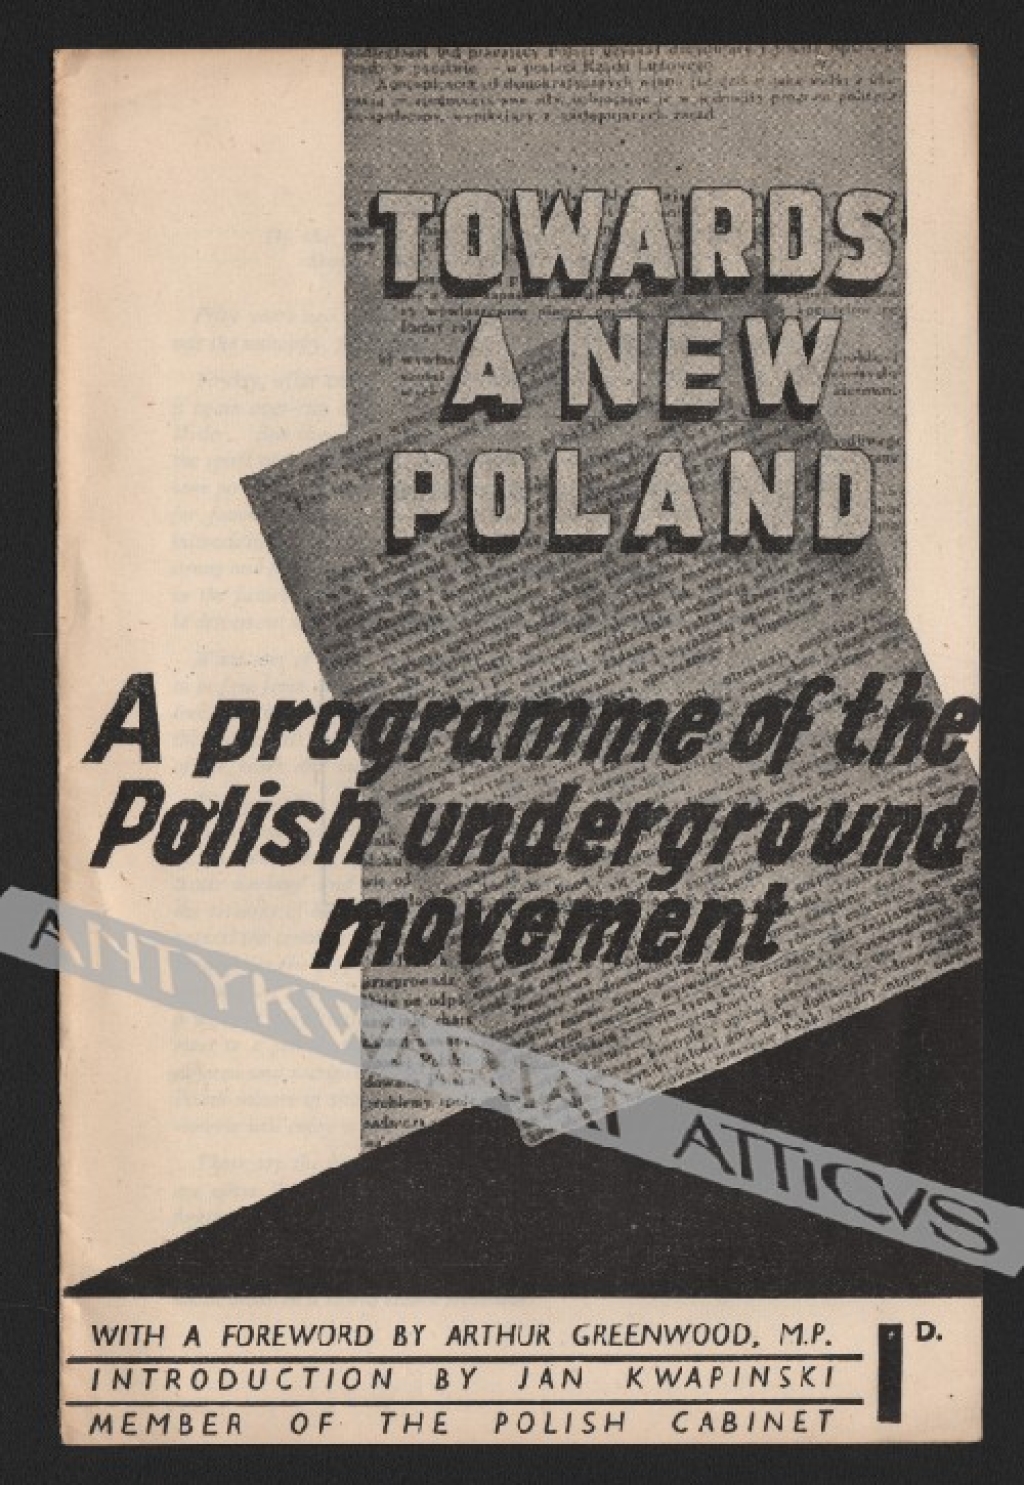 Towards a New Poland. A programme of the Polish underground movement